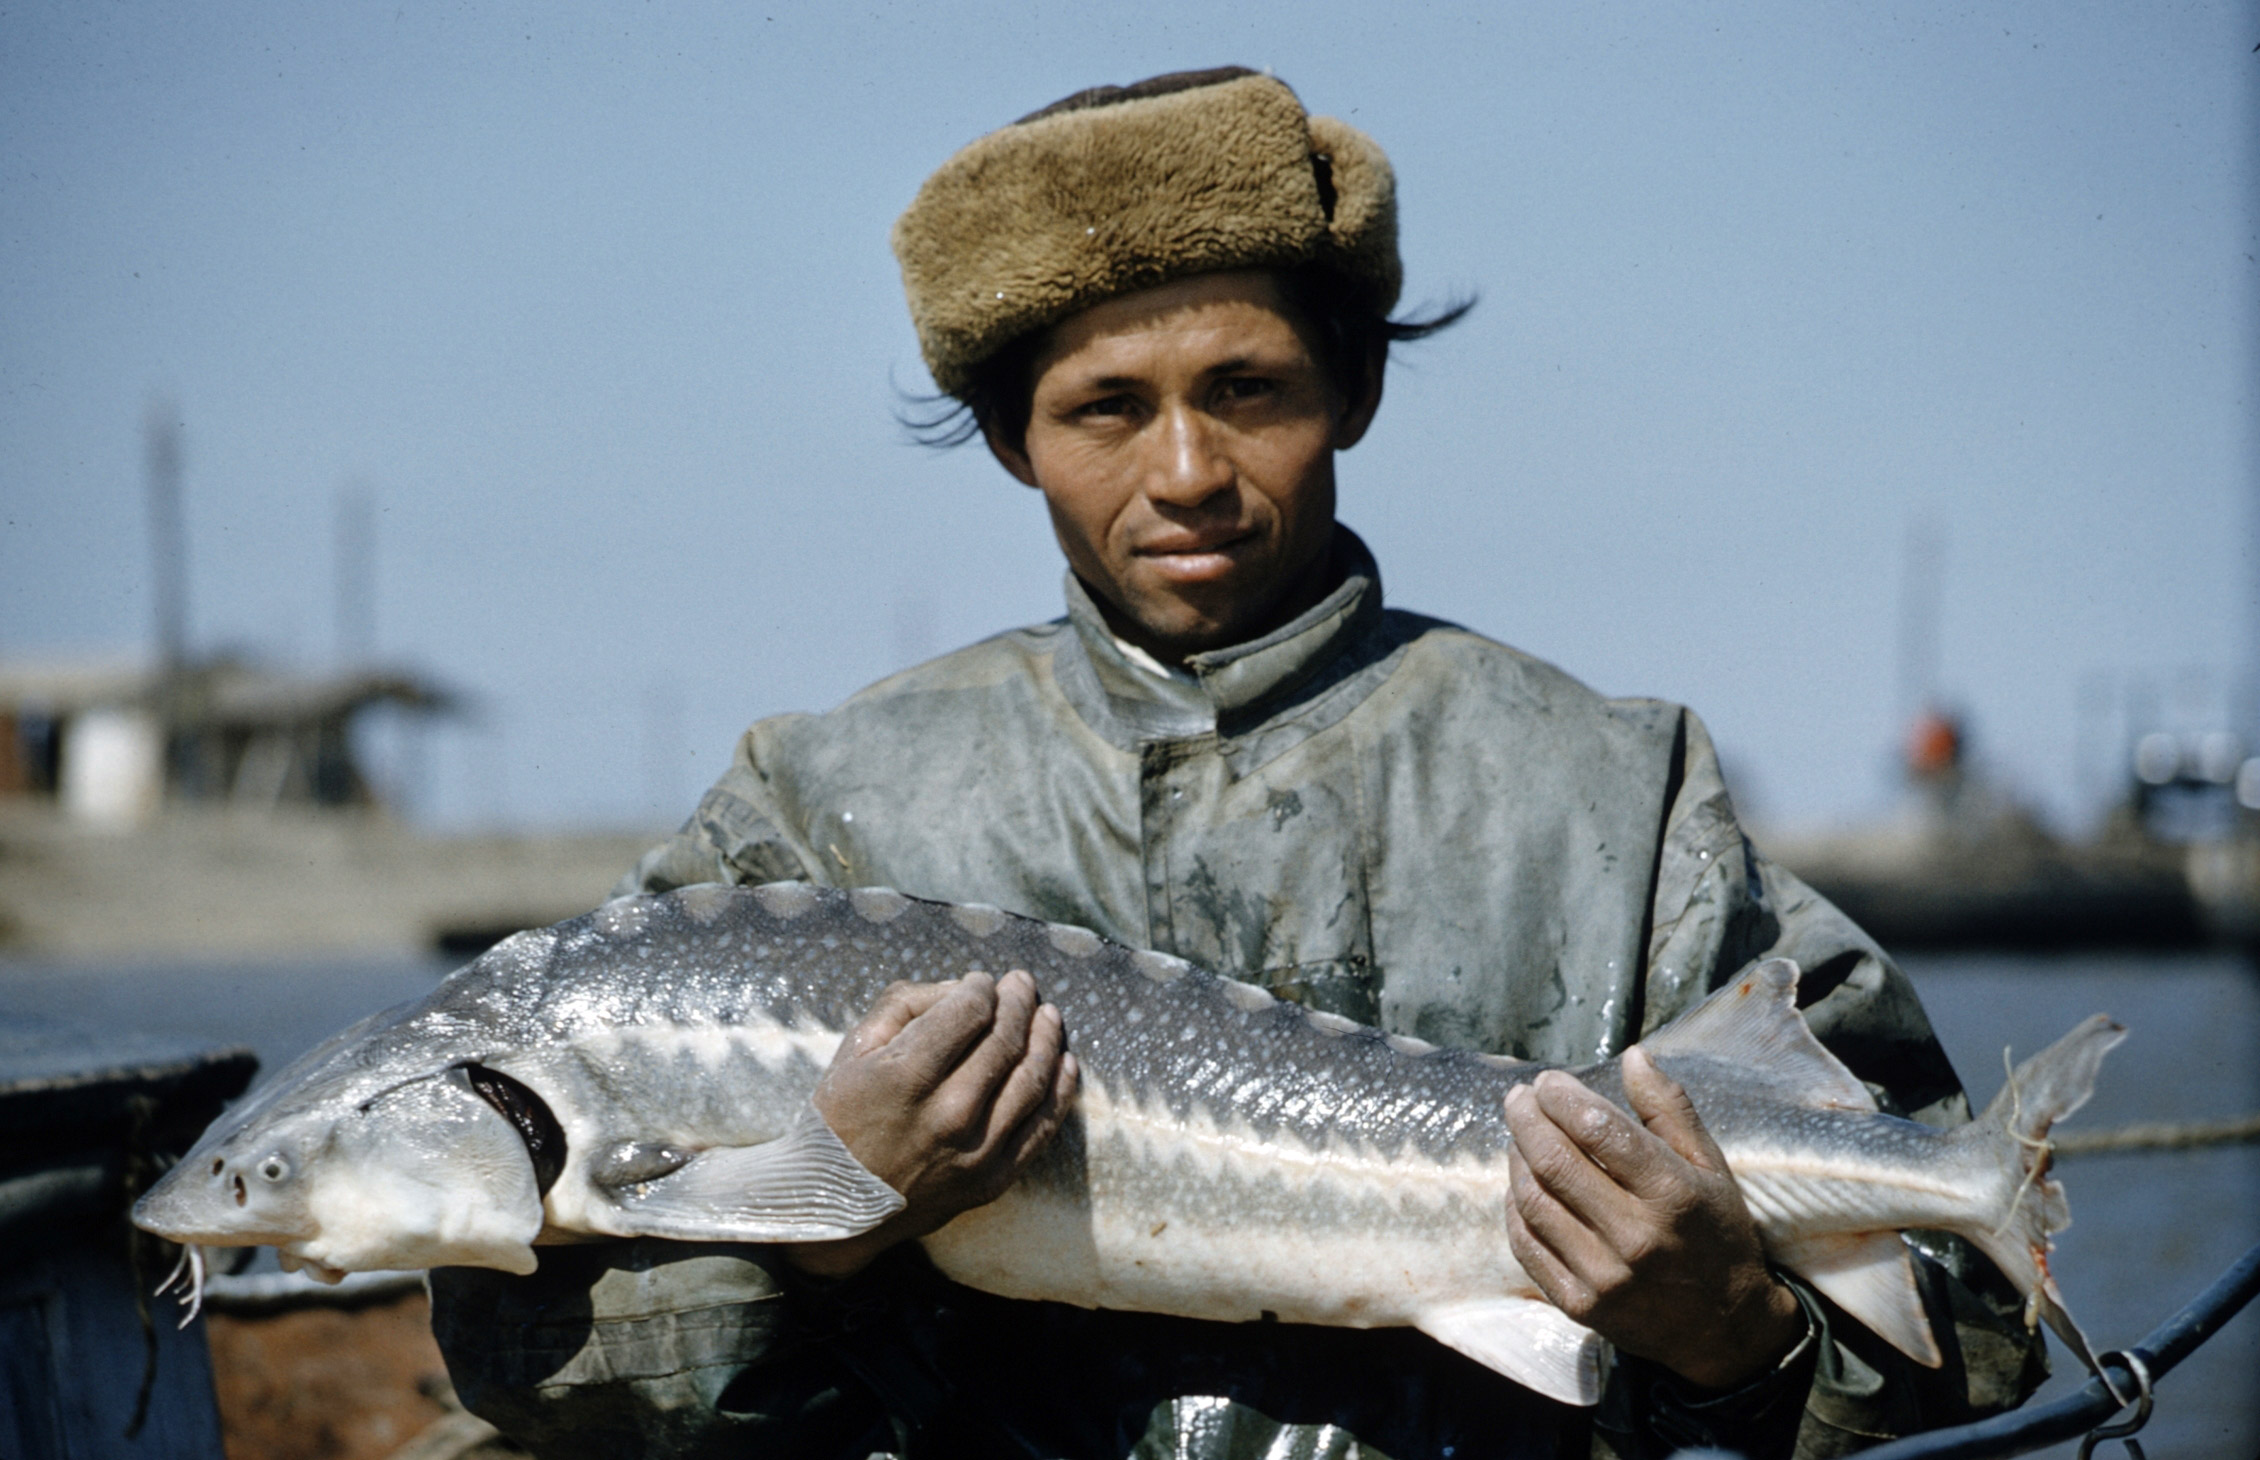 Sturgeon and Russian caviar 1960 photo essay by Carl Mydans.